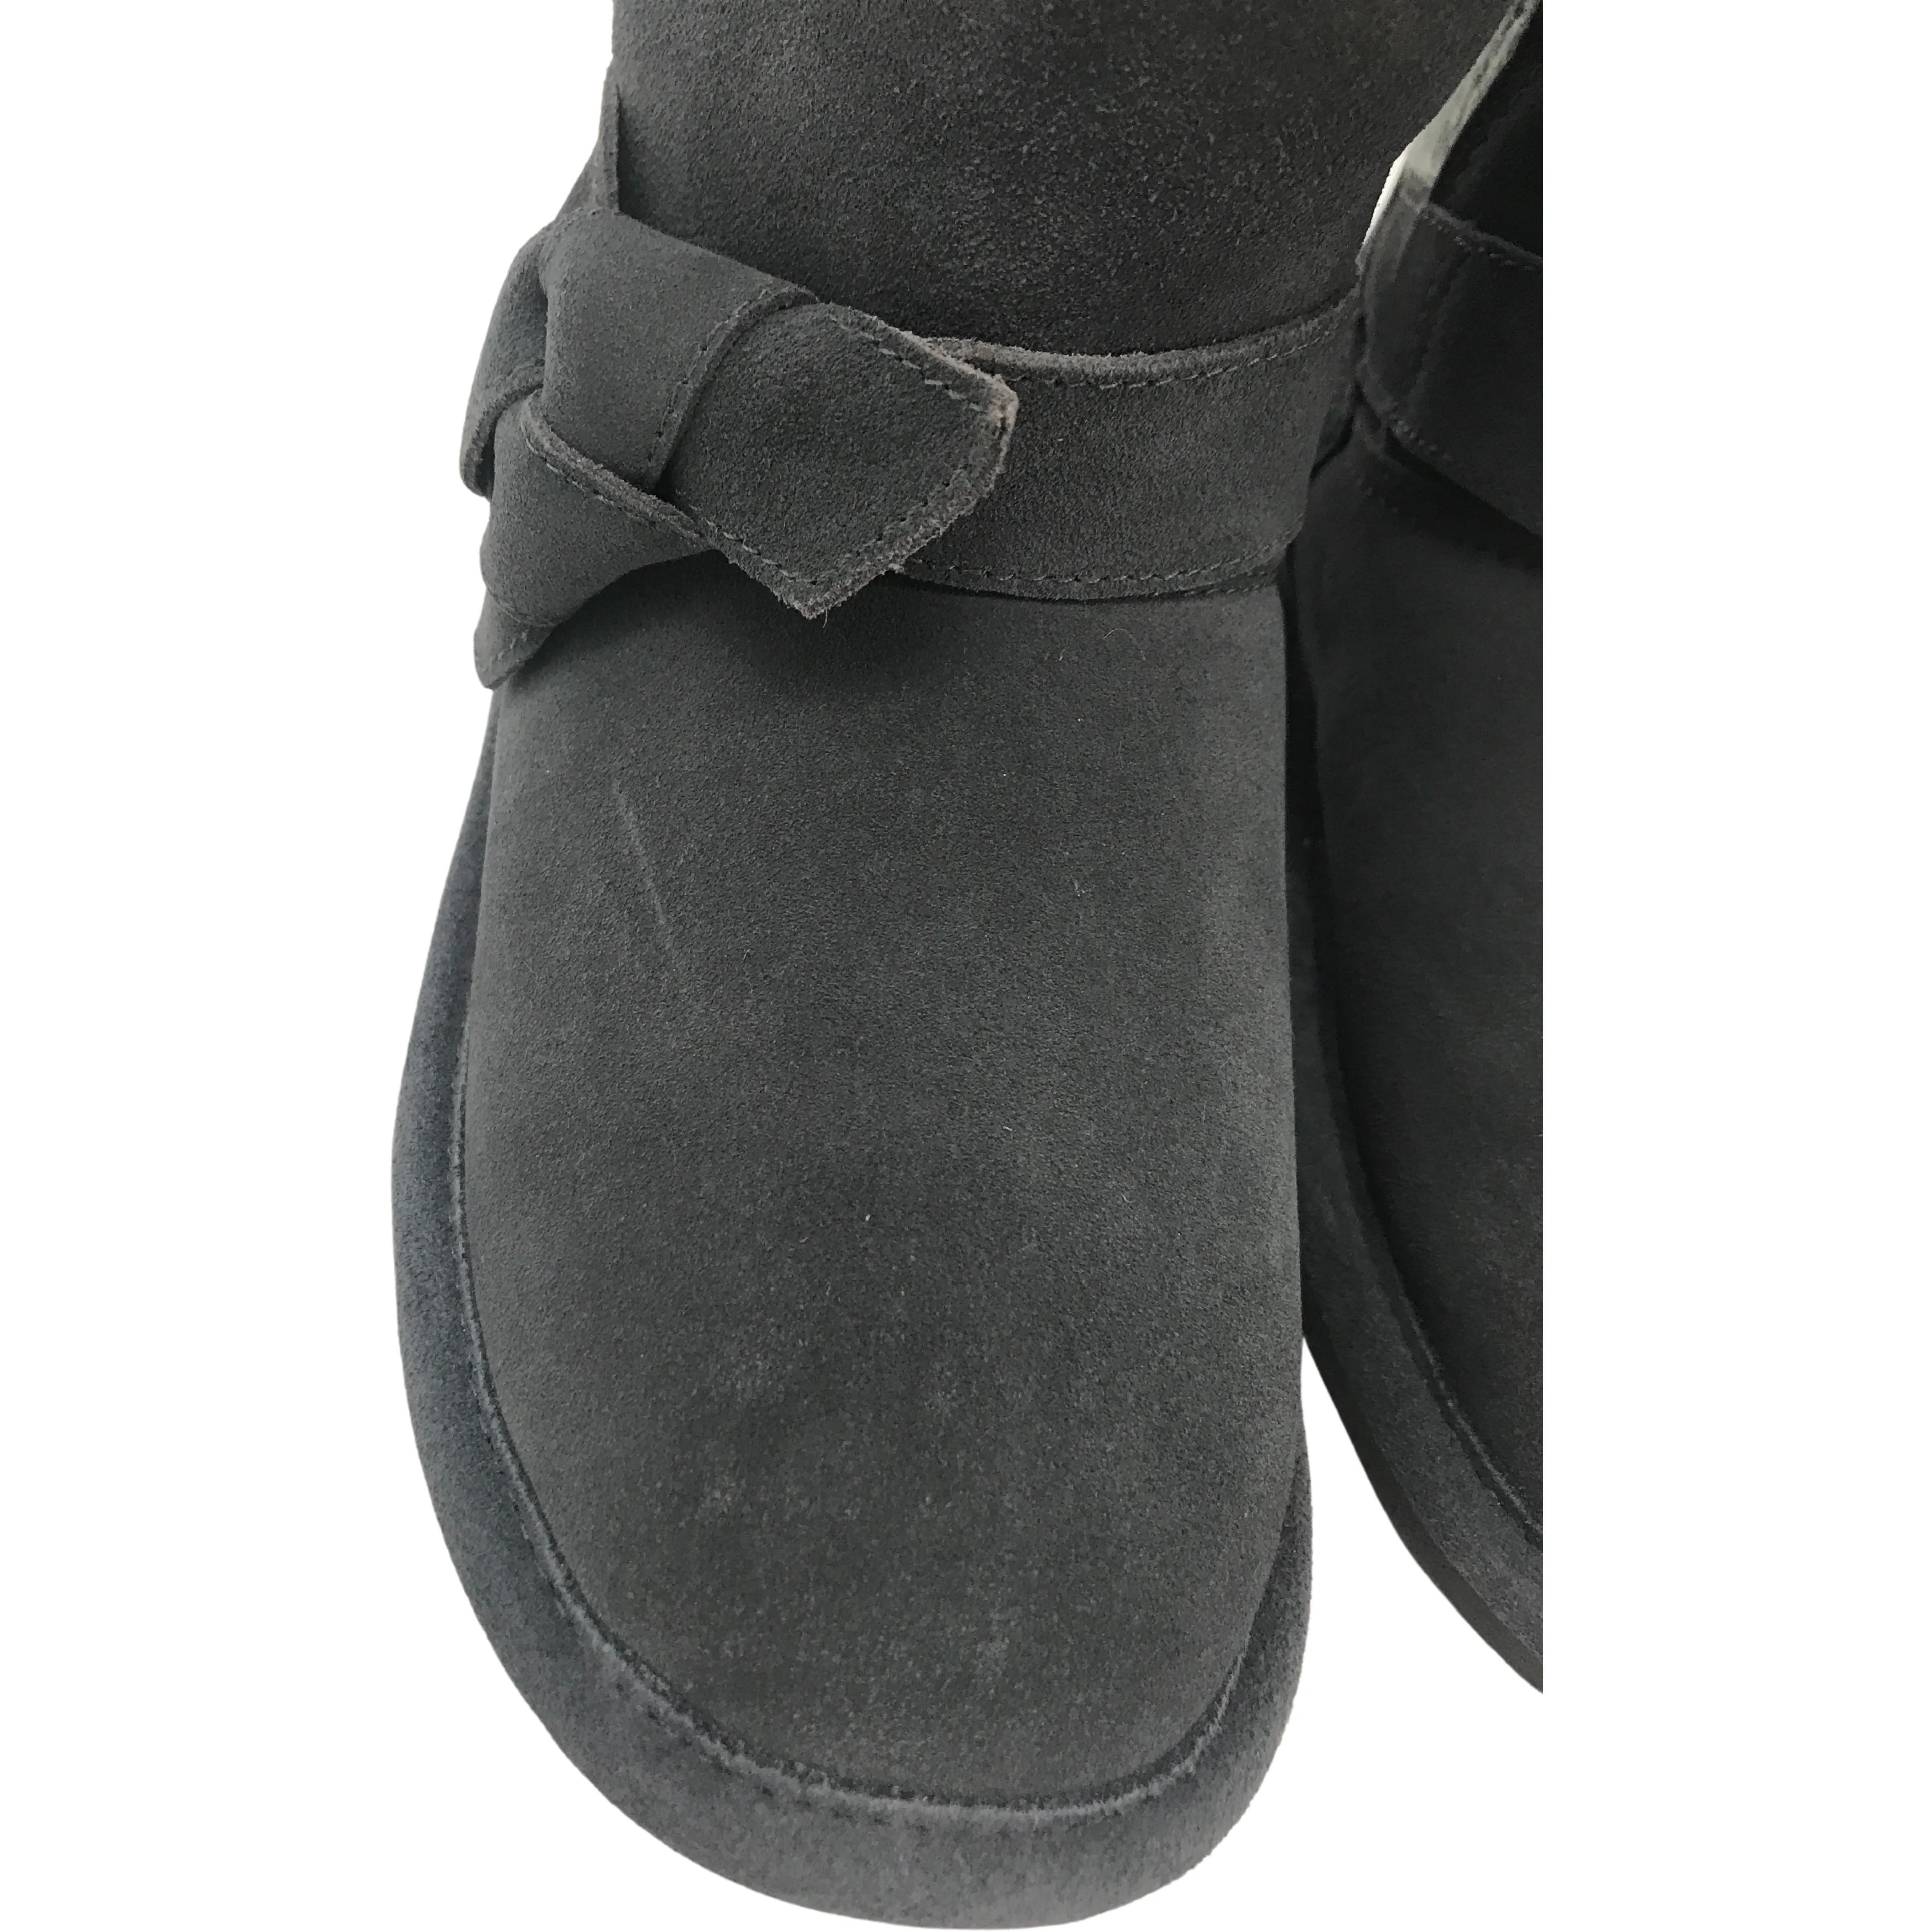 BearPaw Women's Winter Boots / Short Winter Boots / Geneva Knitted Boots / Grey / Size 5 **WORN**